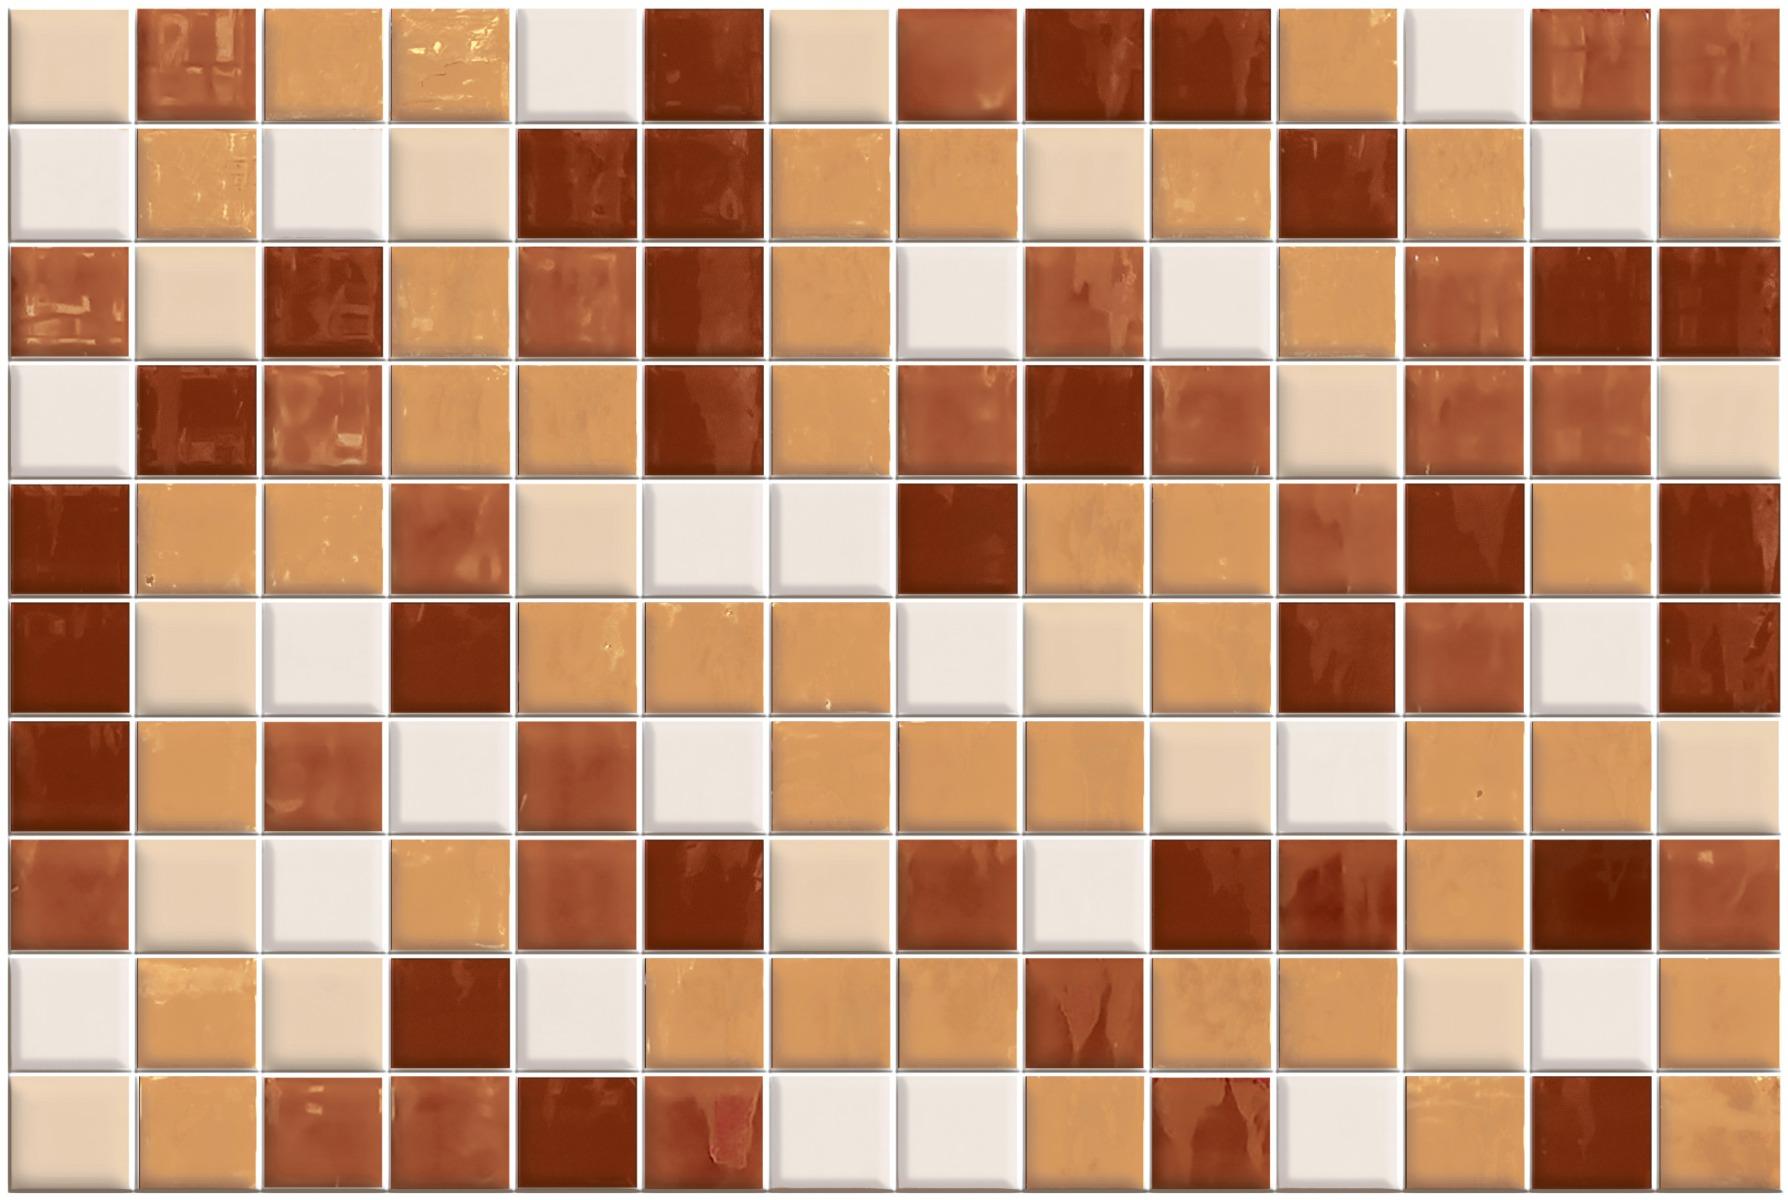 Dining Room Tiles for Bathroom Tiles, Kitchen Tiles, Accent Tiles, Dining Room Tiles